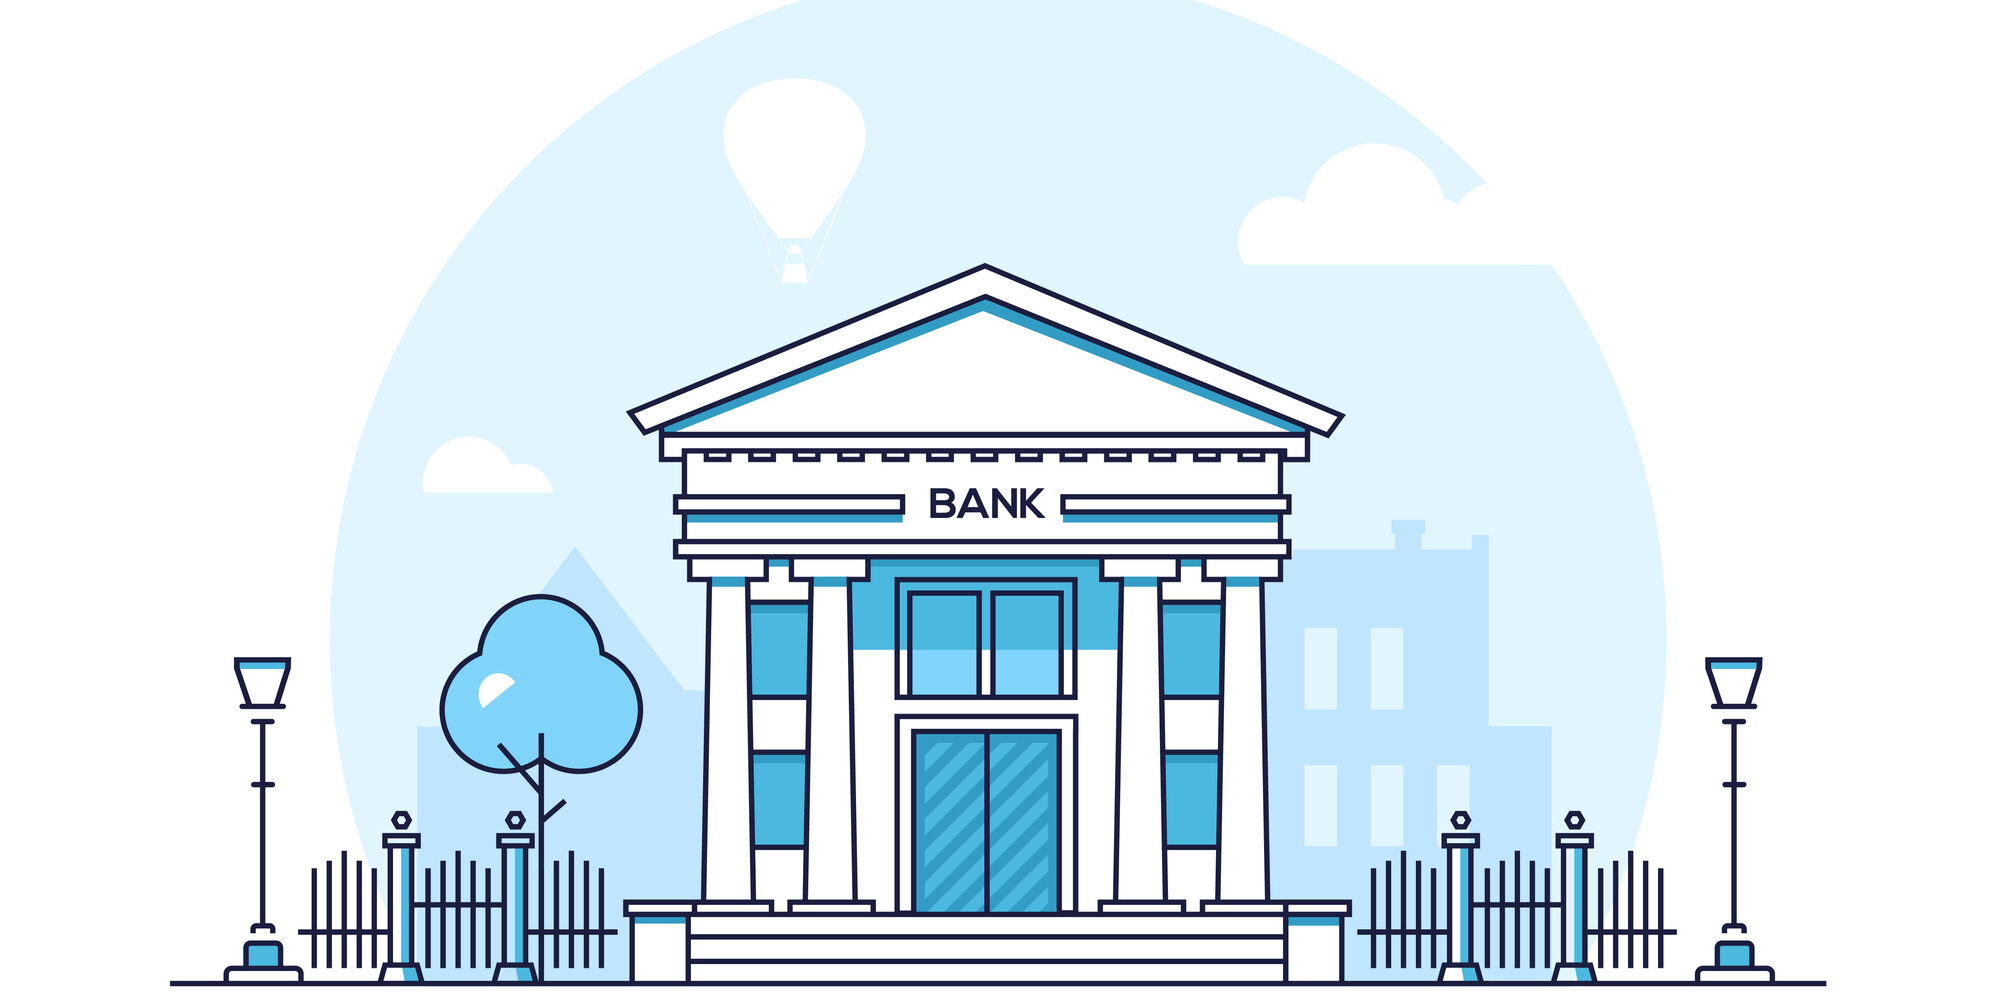 Банк схематично